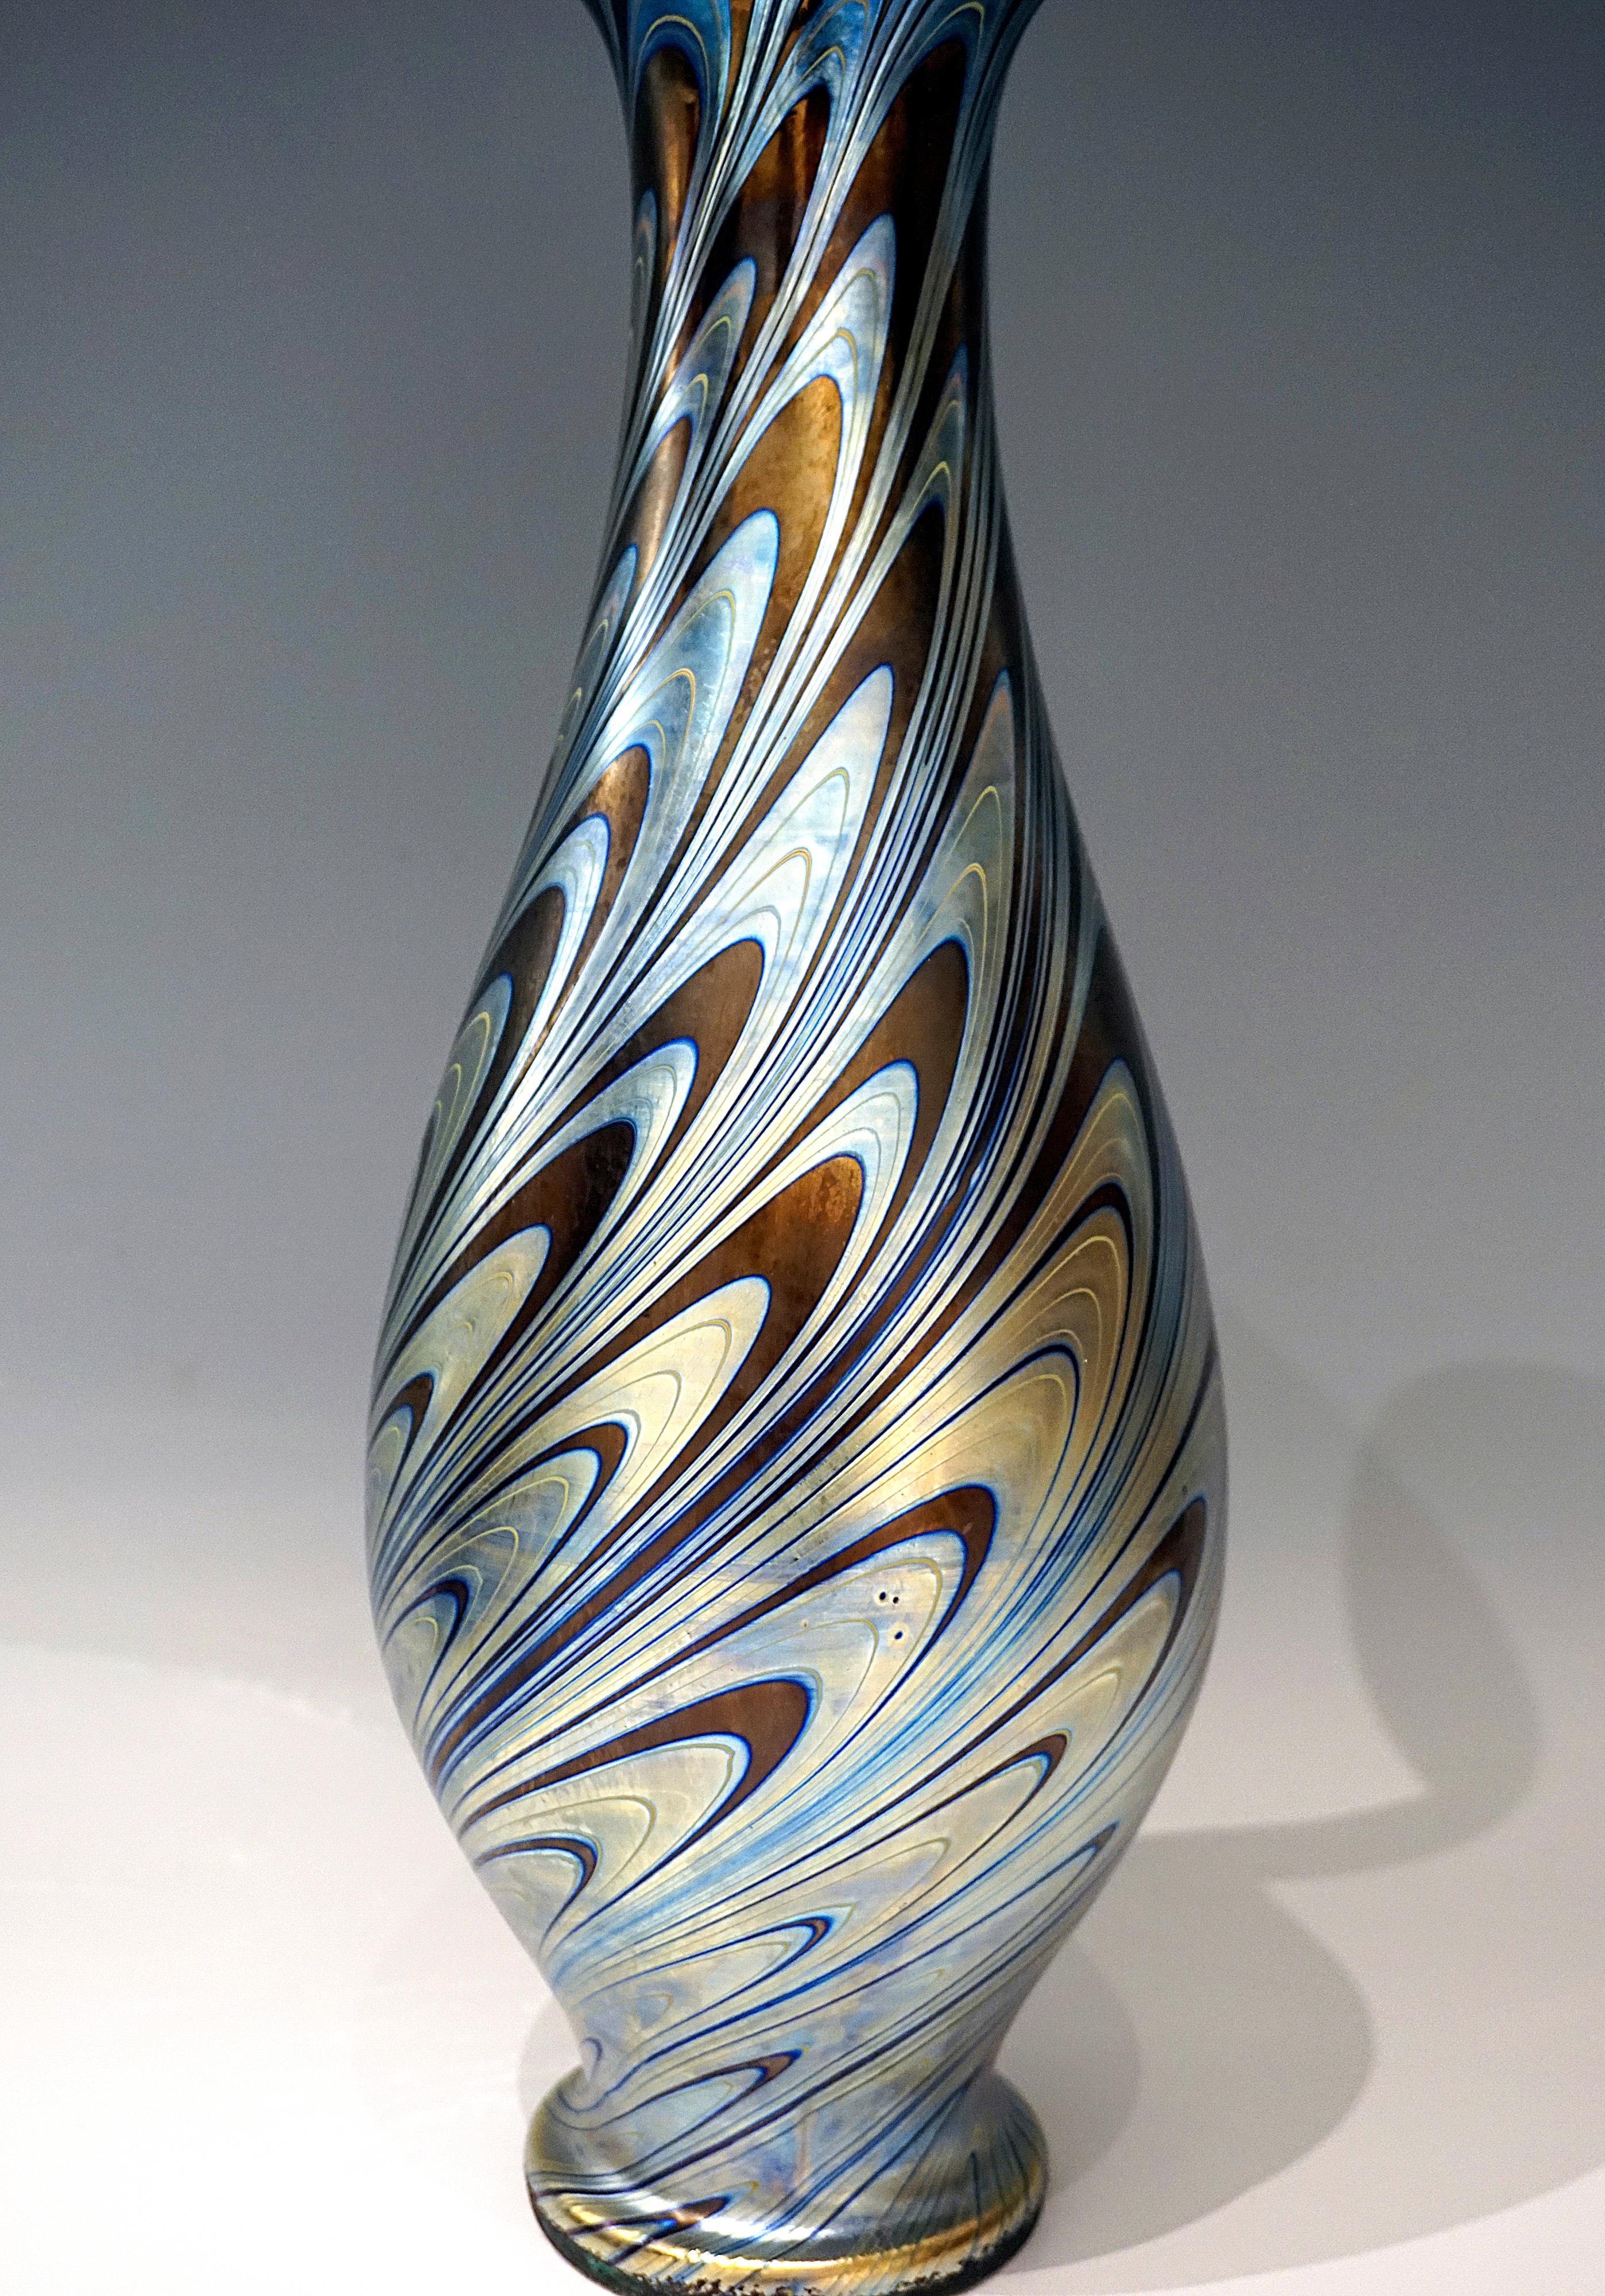 Late 19th Century Large Loetz Art Nouveau Vase, Ruby Phenomenon Gre 7624, Austria-Hungary, Ca 1898 For Sale